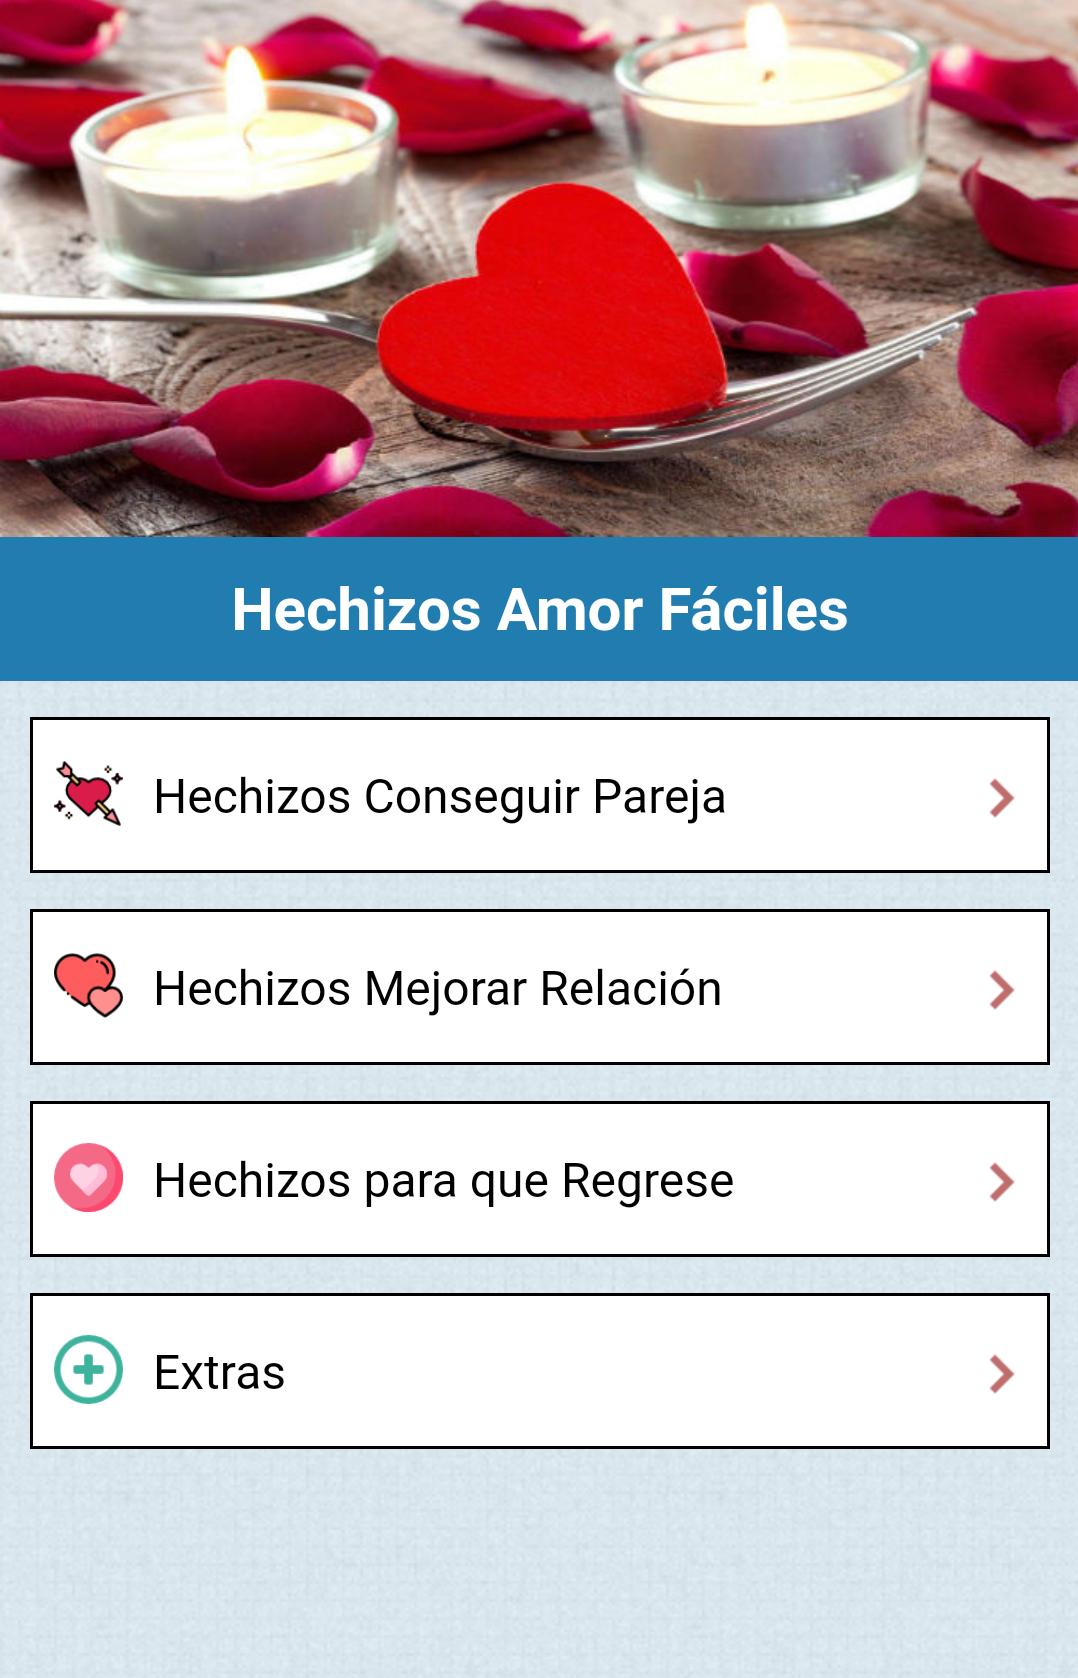 Hechizos De Amor Faciles Rapidos Y Efectivos For Android Apk